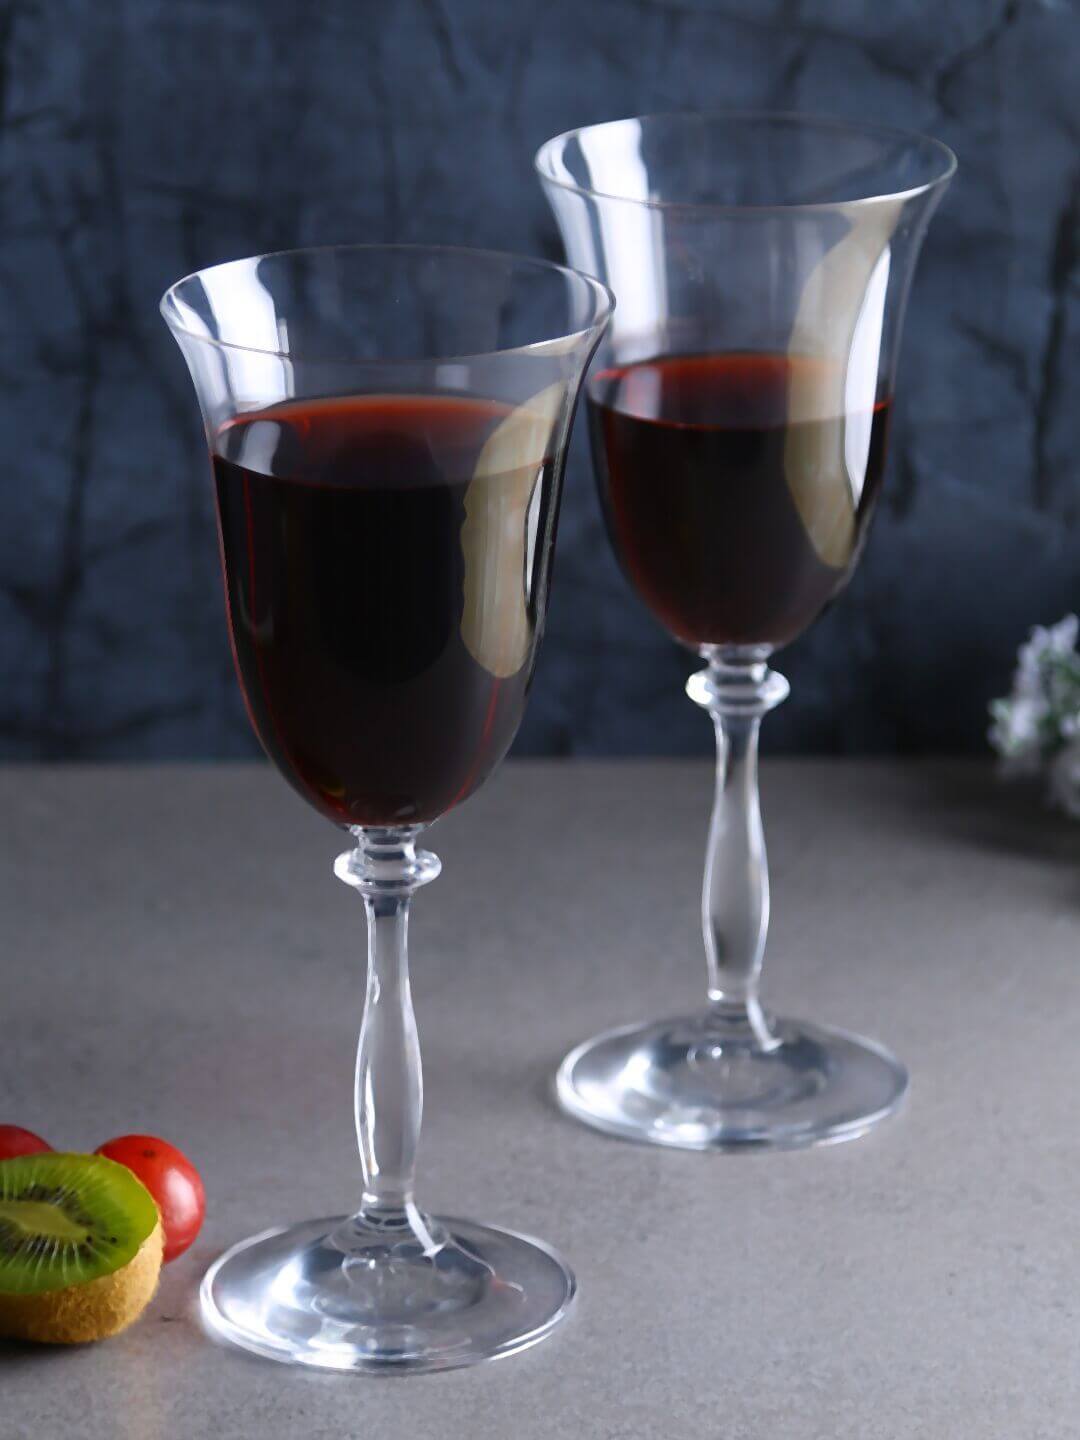 Bohemia Crystal Angela Wine Glass Set, 350ml, Set of 6pcs, Transparent, Non Lead Crystal Glass | Wine Glass